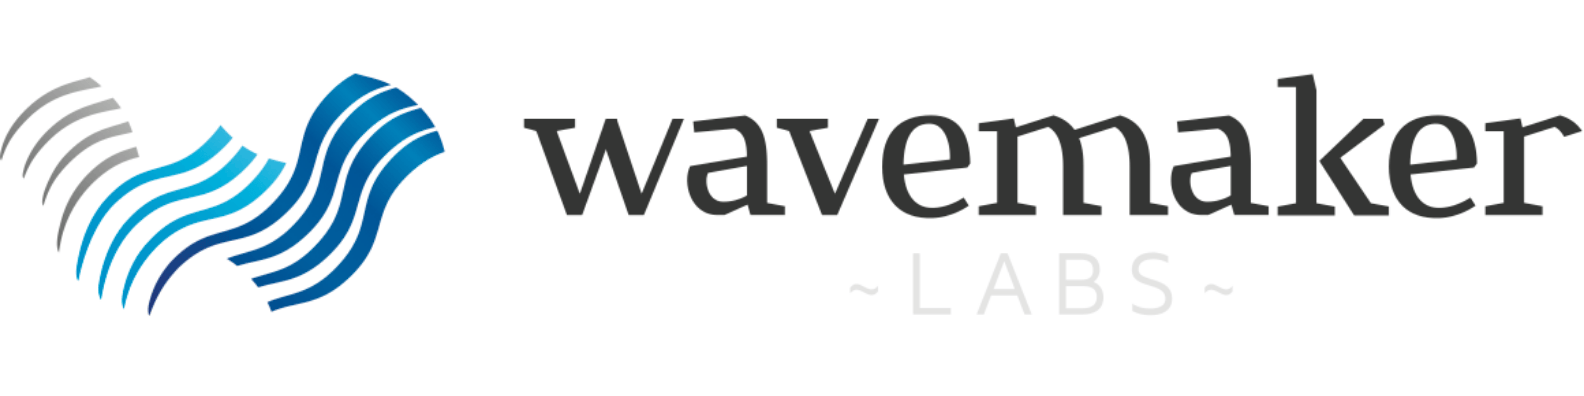 wavemaker jobs